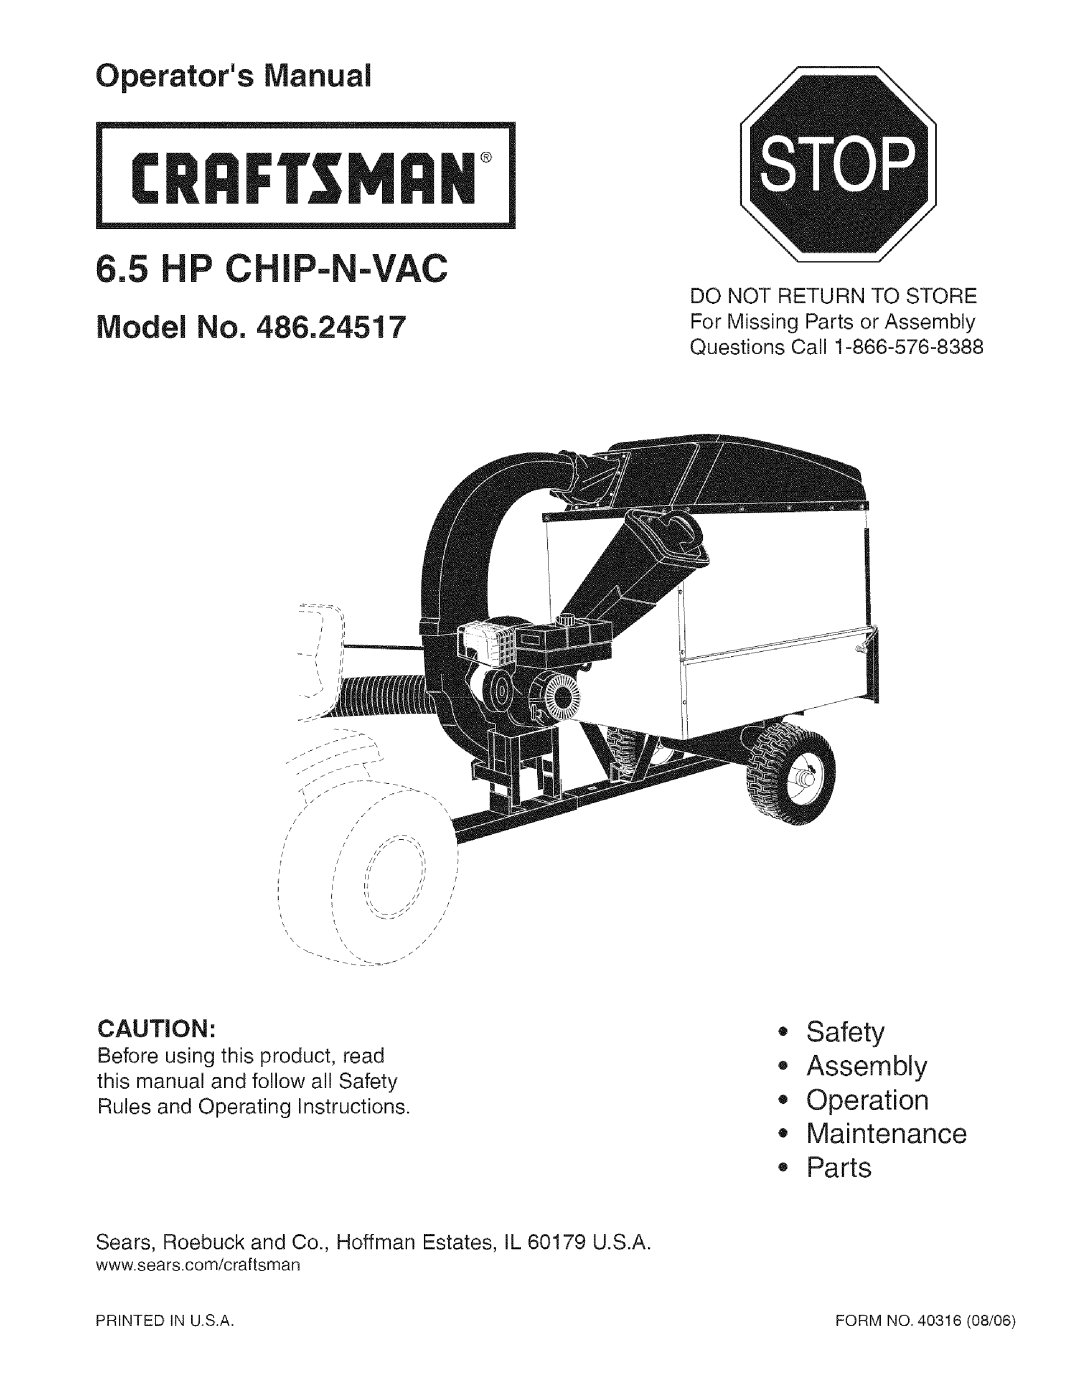 Craftsman 486.24517 manual Safety Assembly Operation Maintenance Parts, CRRFr$14RN, Hp Chip-N-Vac, Operators Manual 